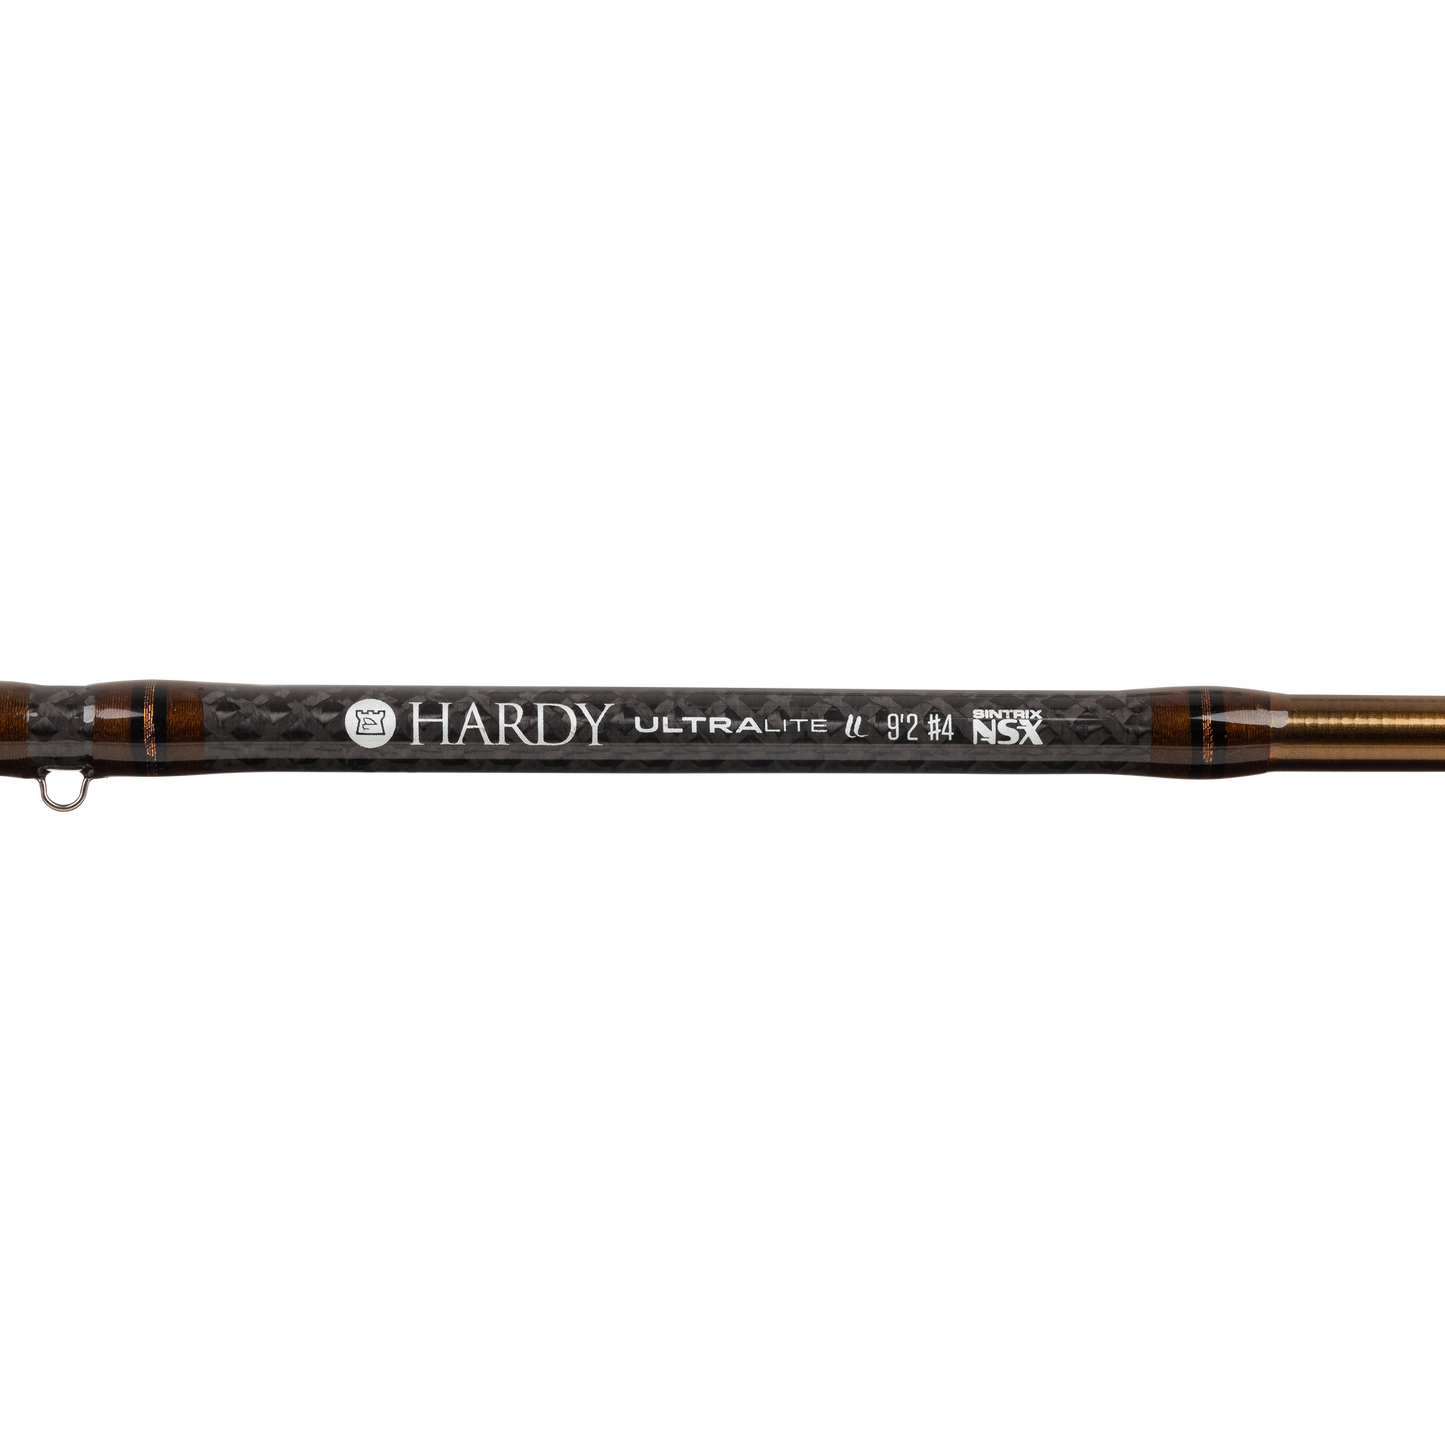 Hardy Ultralite LL 10.8FT 3Line 4PC rod